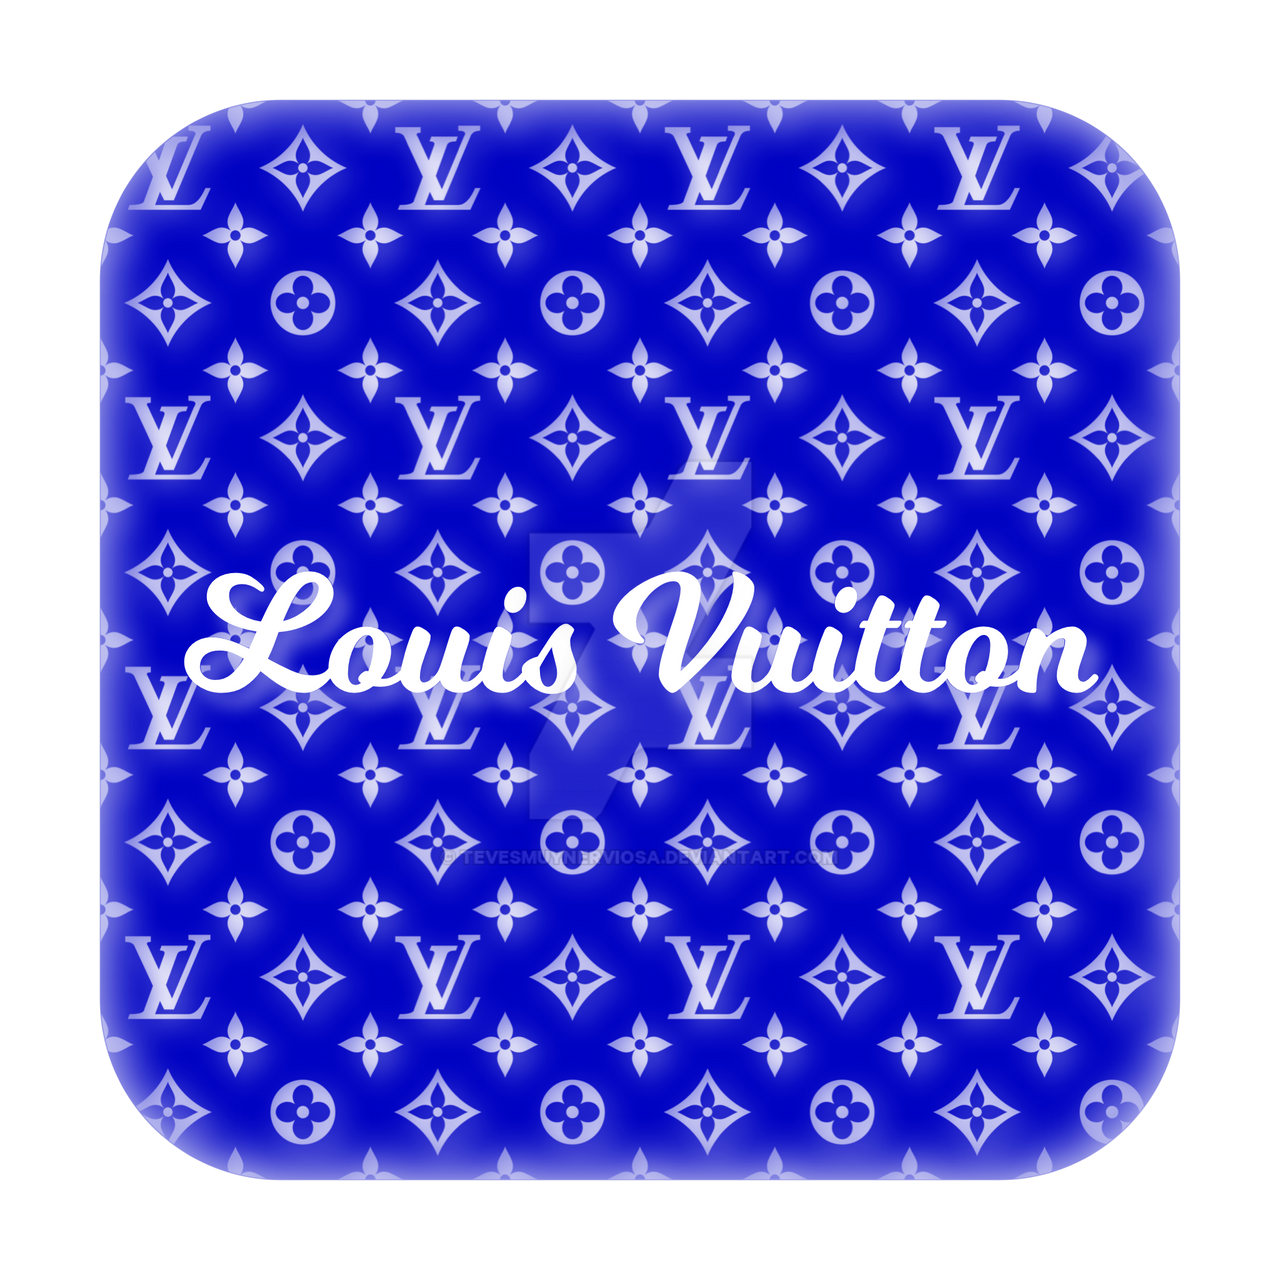 Louis Vuitton Wallpaper PNG by TeVesMuyNerviosa on DeviantArt